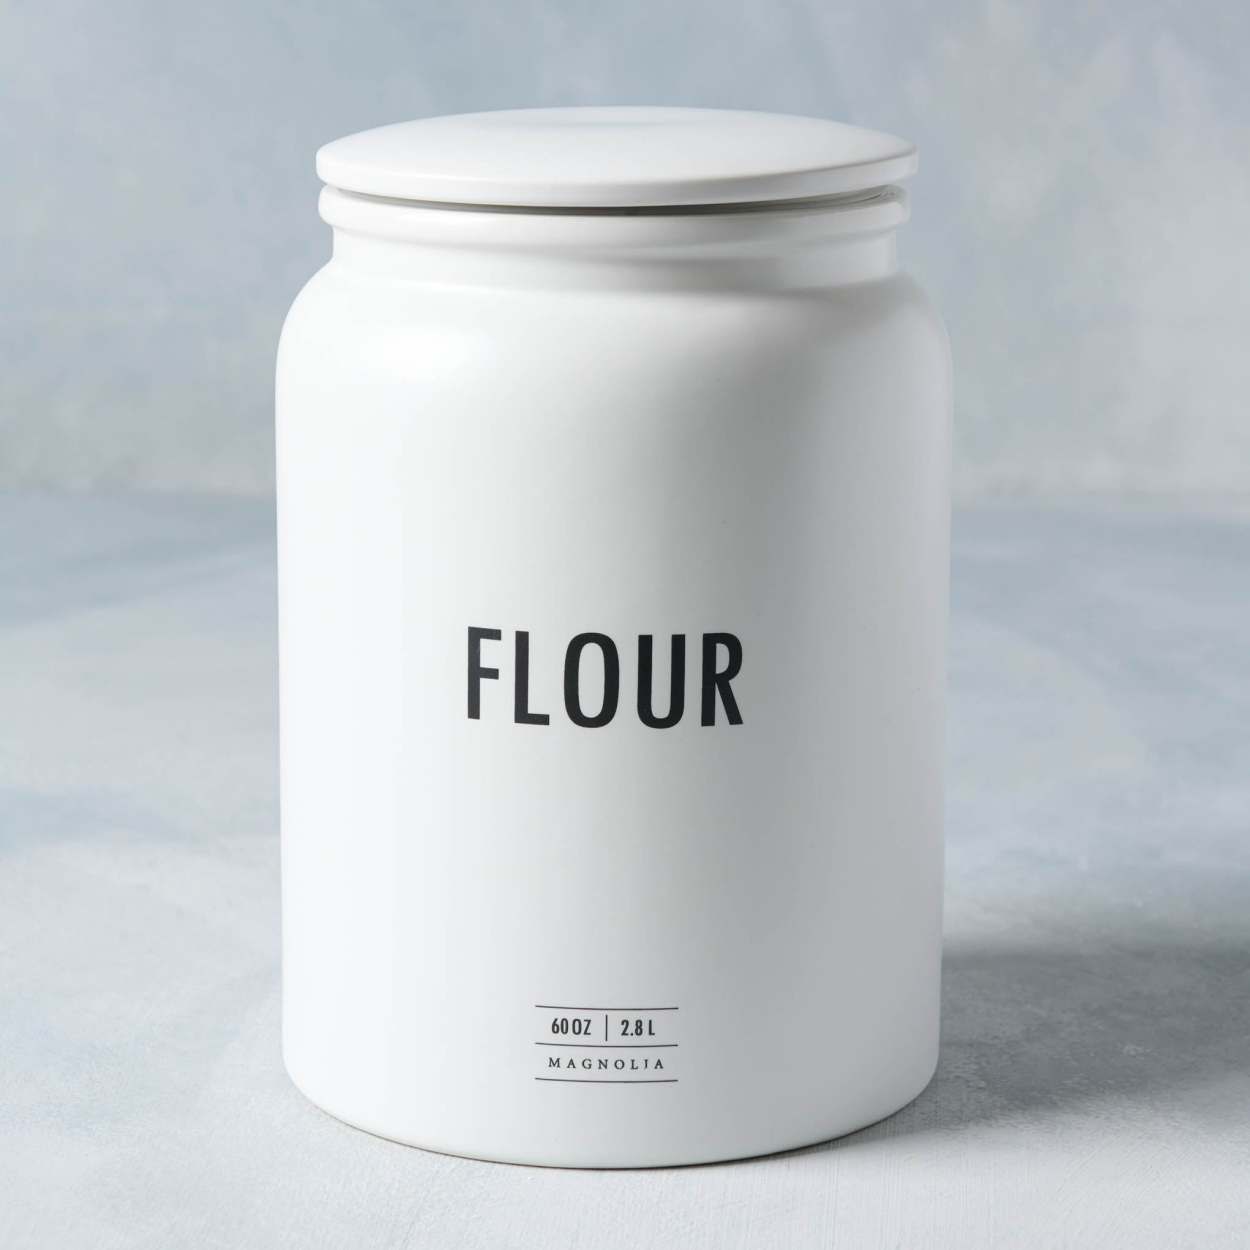 Just Words Flour Coffee Sugar Tea White Ceramic Kitchen Canister